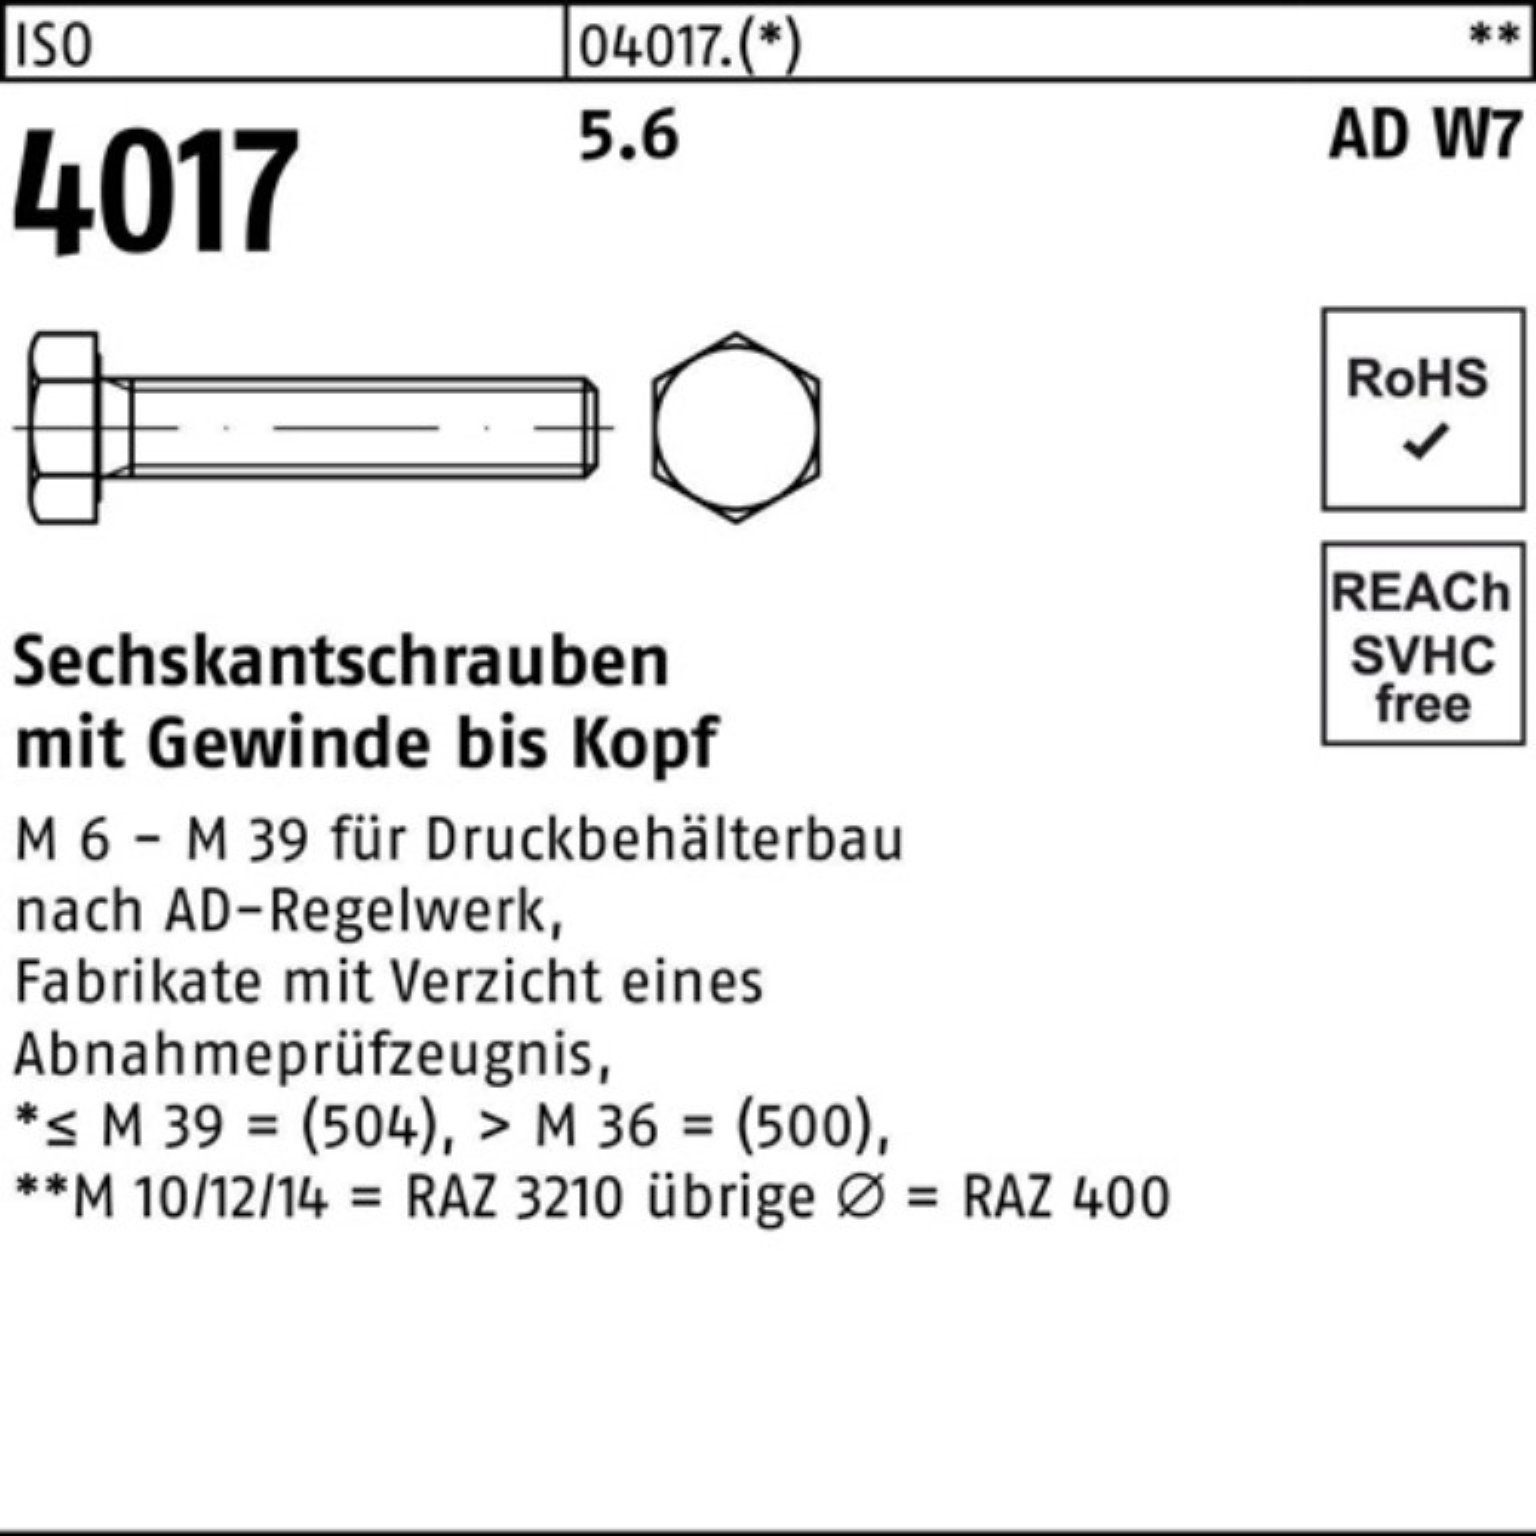 Bufab Sechskantschraube 100er 10 5.6 Pack M24x Stück AD W7 4017 ISO VG Sechskantschraube 110